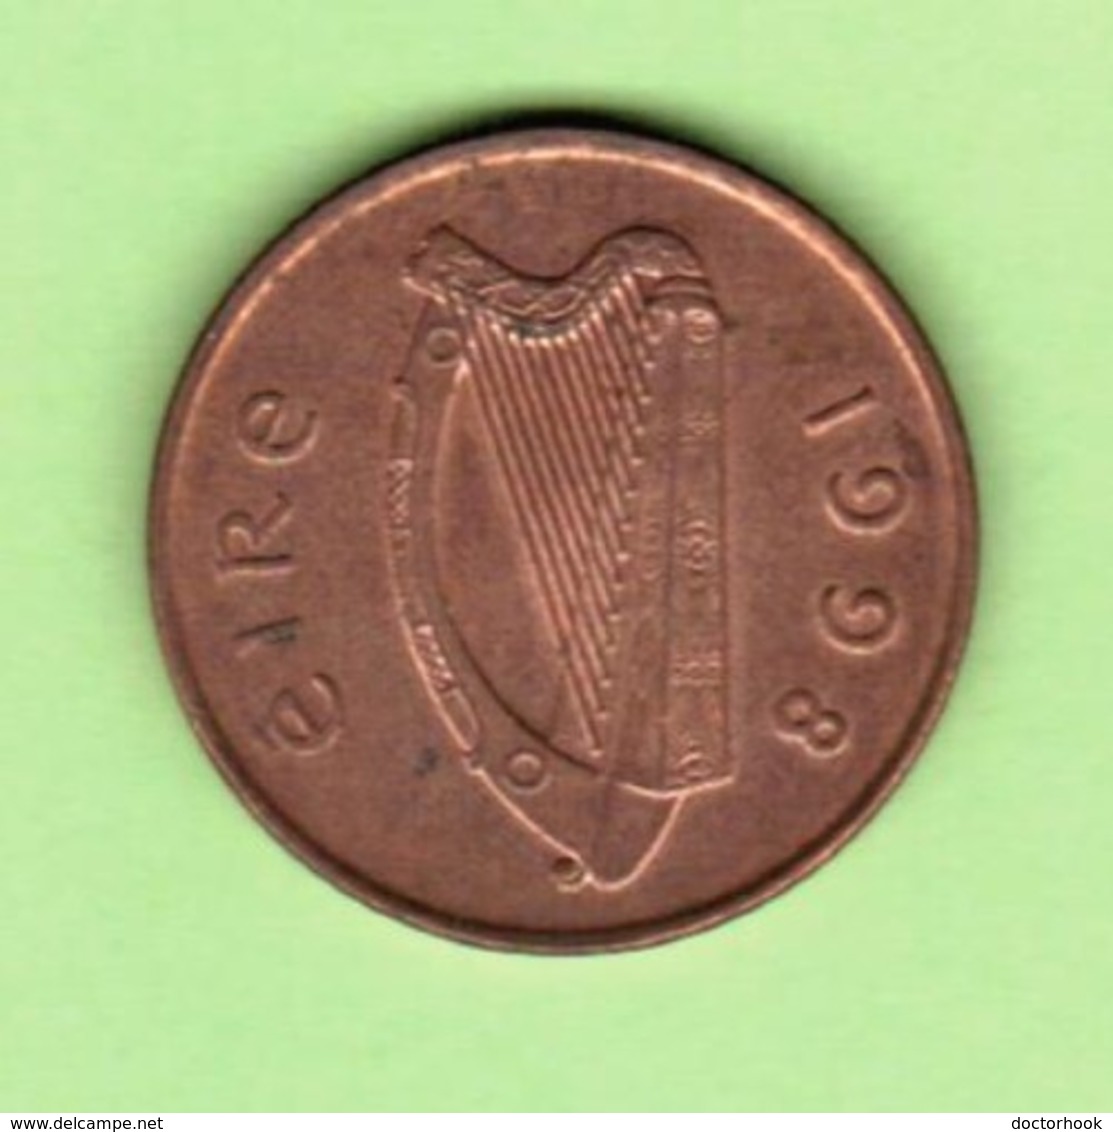 IRELAND   2 PENCE 1998  (KM # 21) #5213 - Ireland